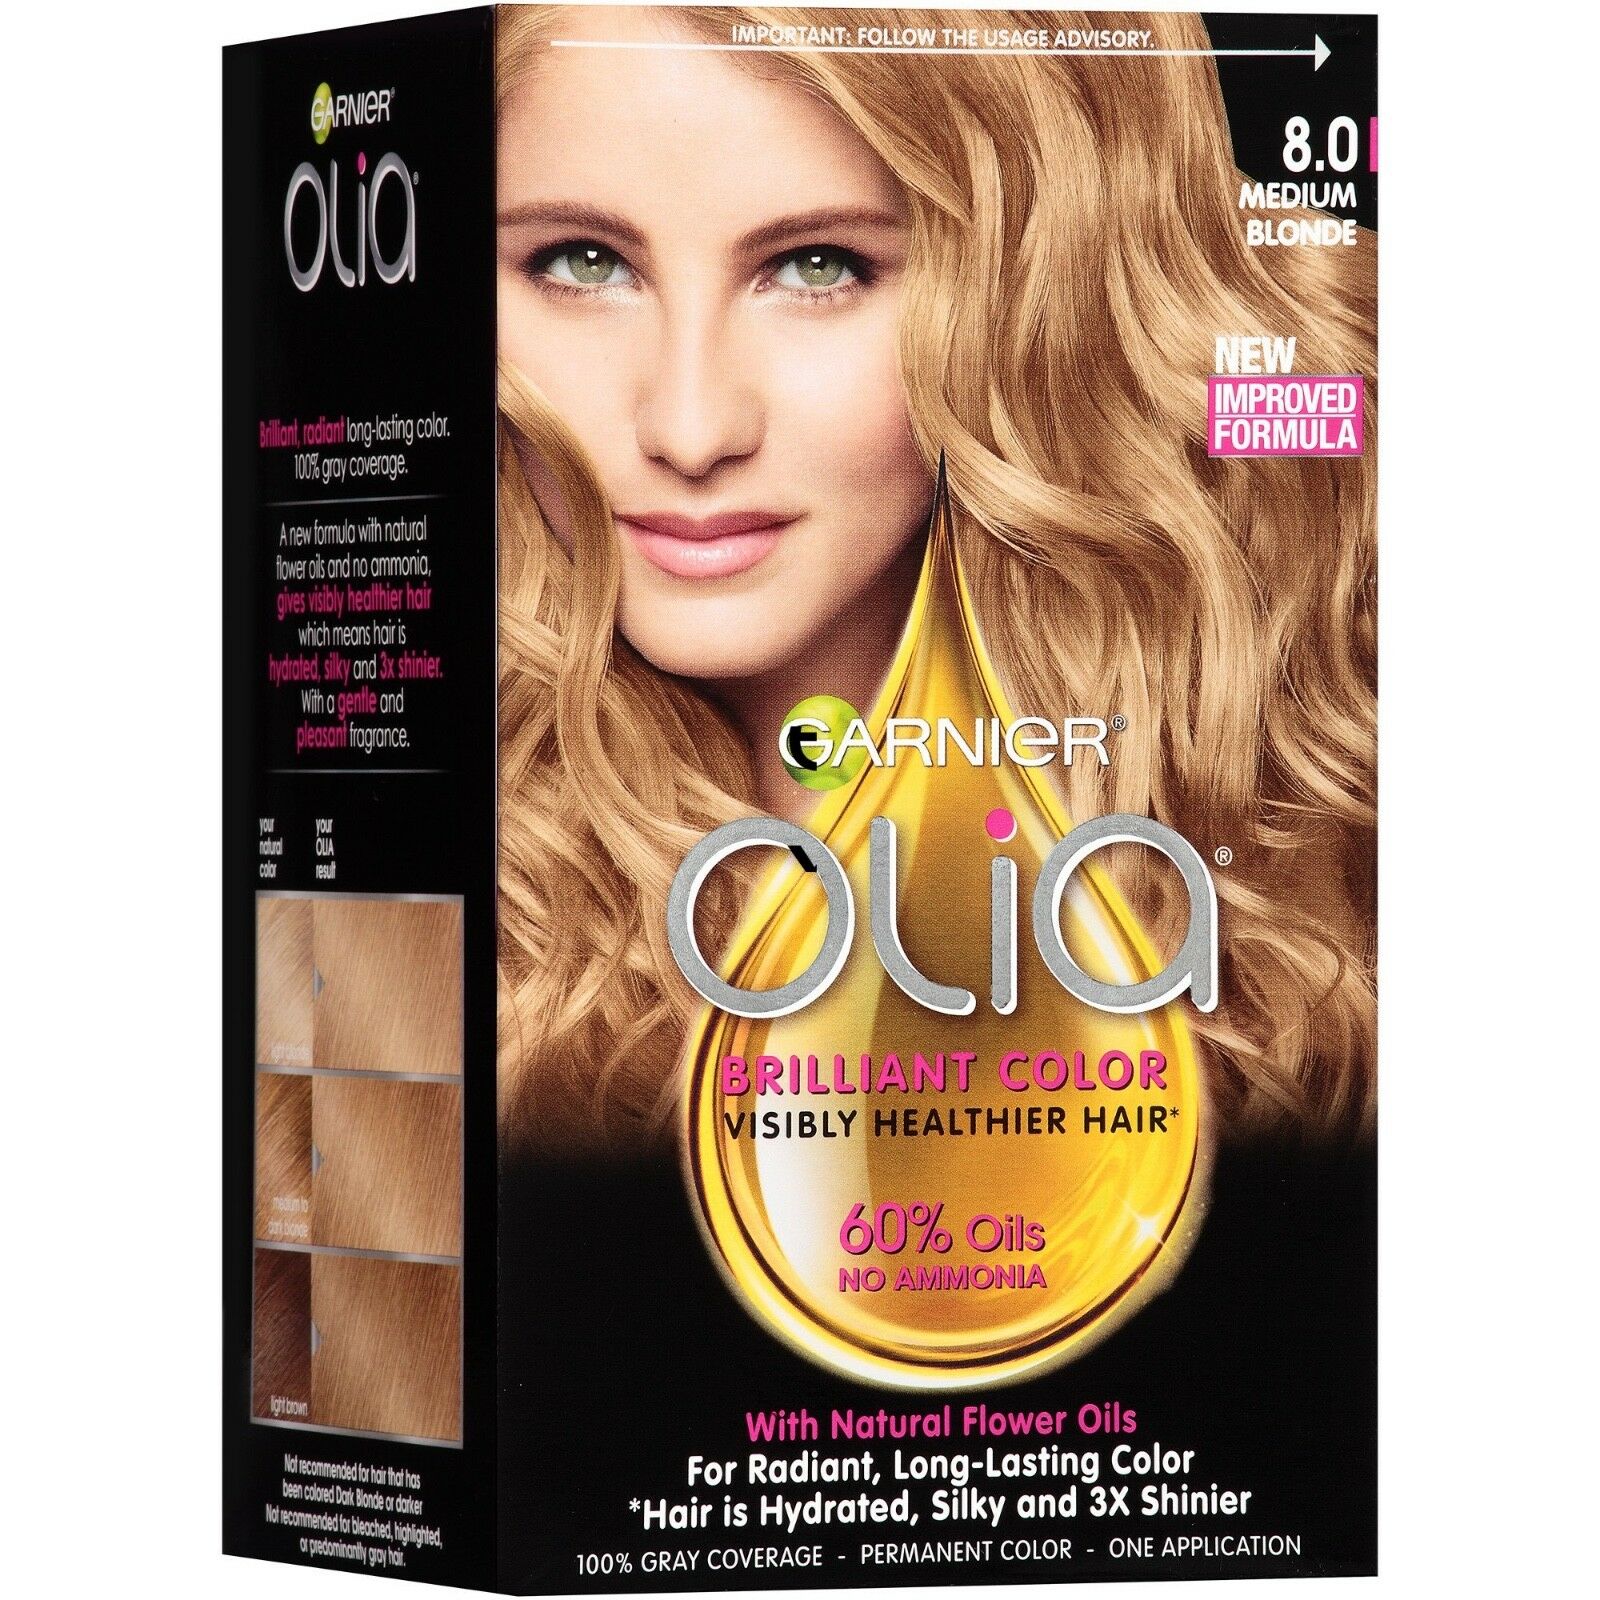 Garnier Olia Brilliant Color Permanent Hair Color 8.0 Medium Blonde | eBay